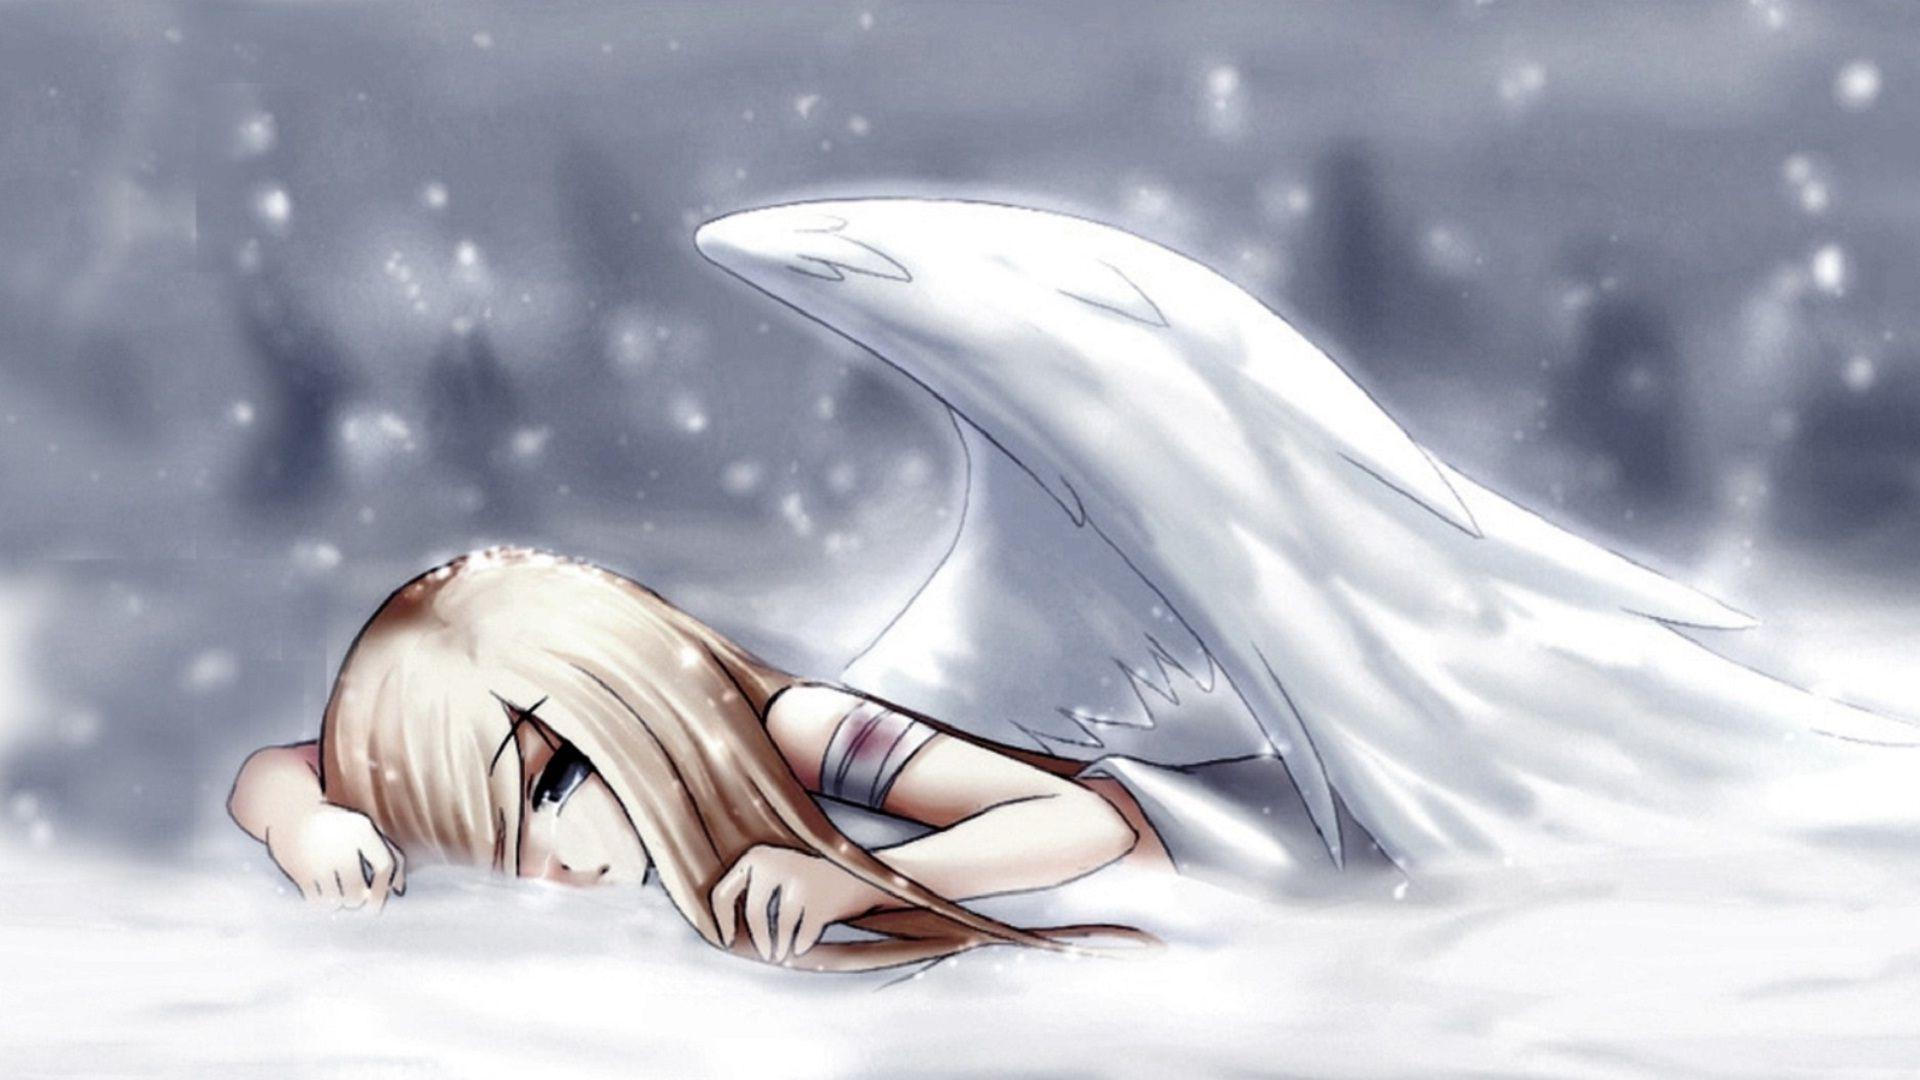 crying angel anime